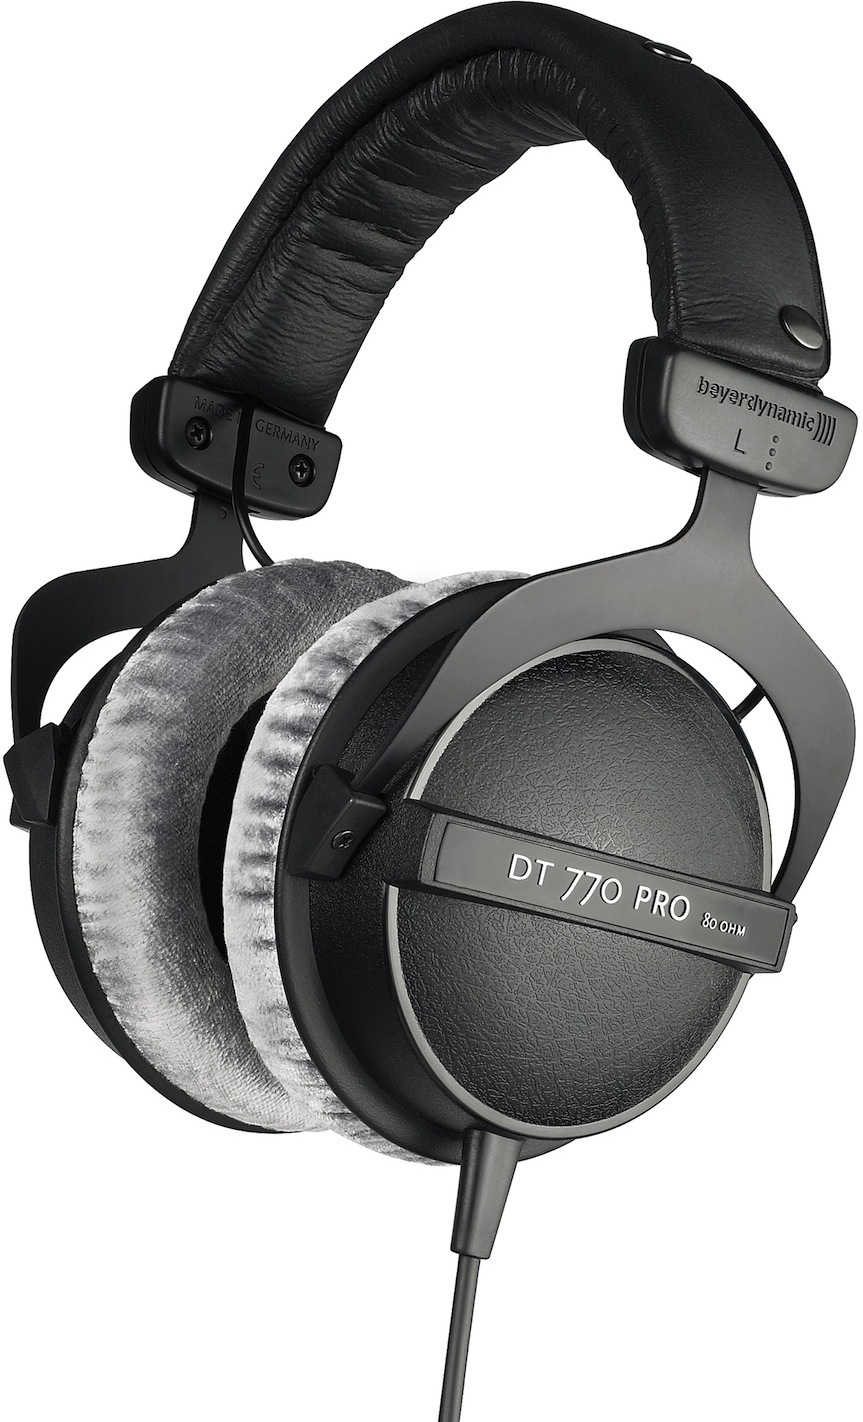 Beyerdynamic Dt 770 Pro 80 Ohms - Closed headset - Main picture